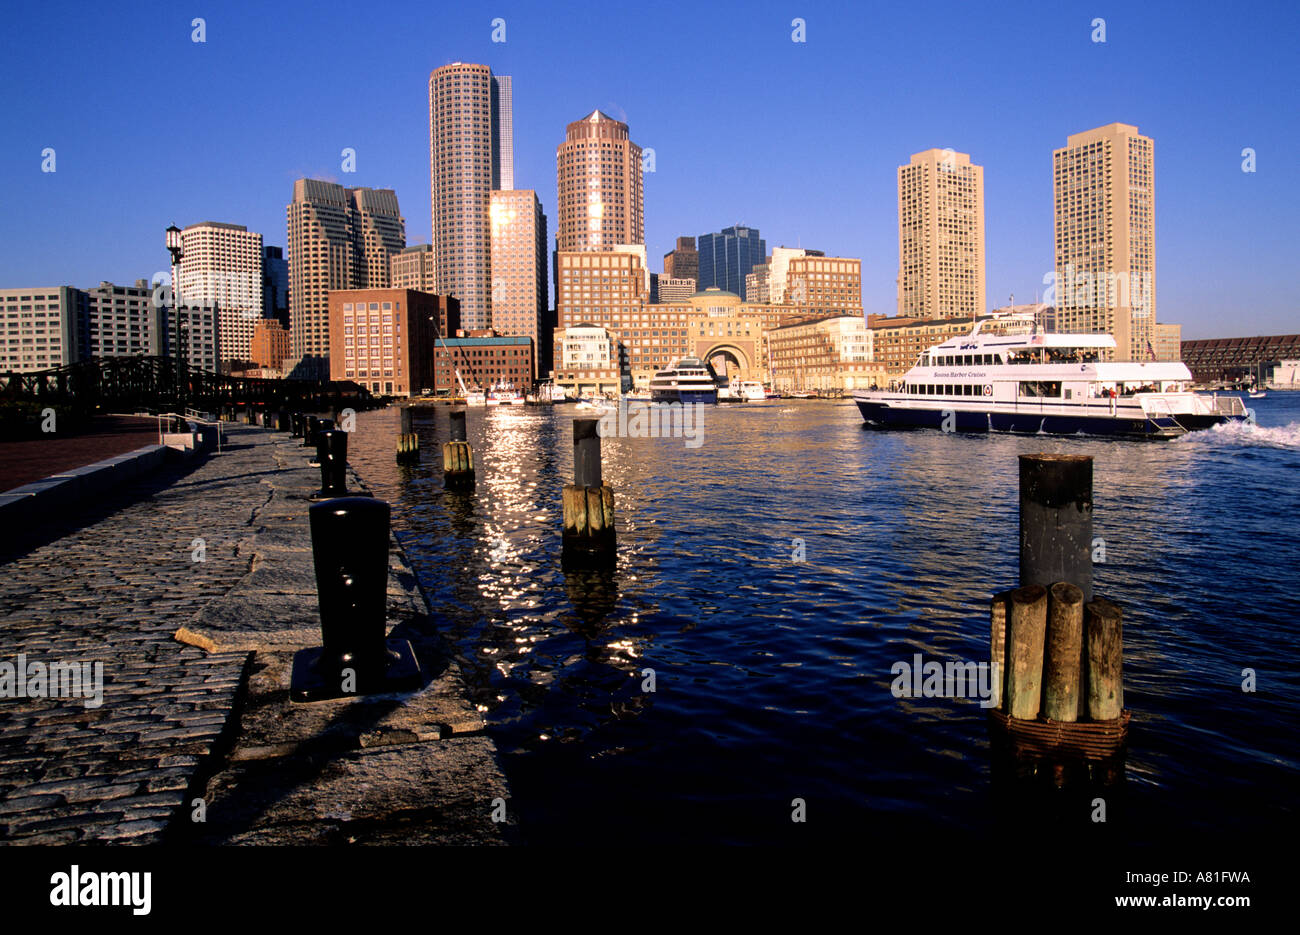 United States, Massachusetts, Boston, harbor and downtown area Stock Photo